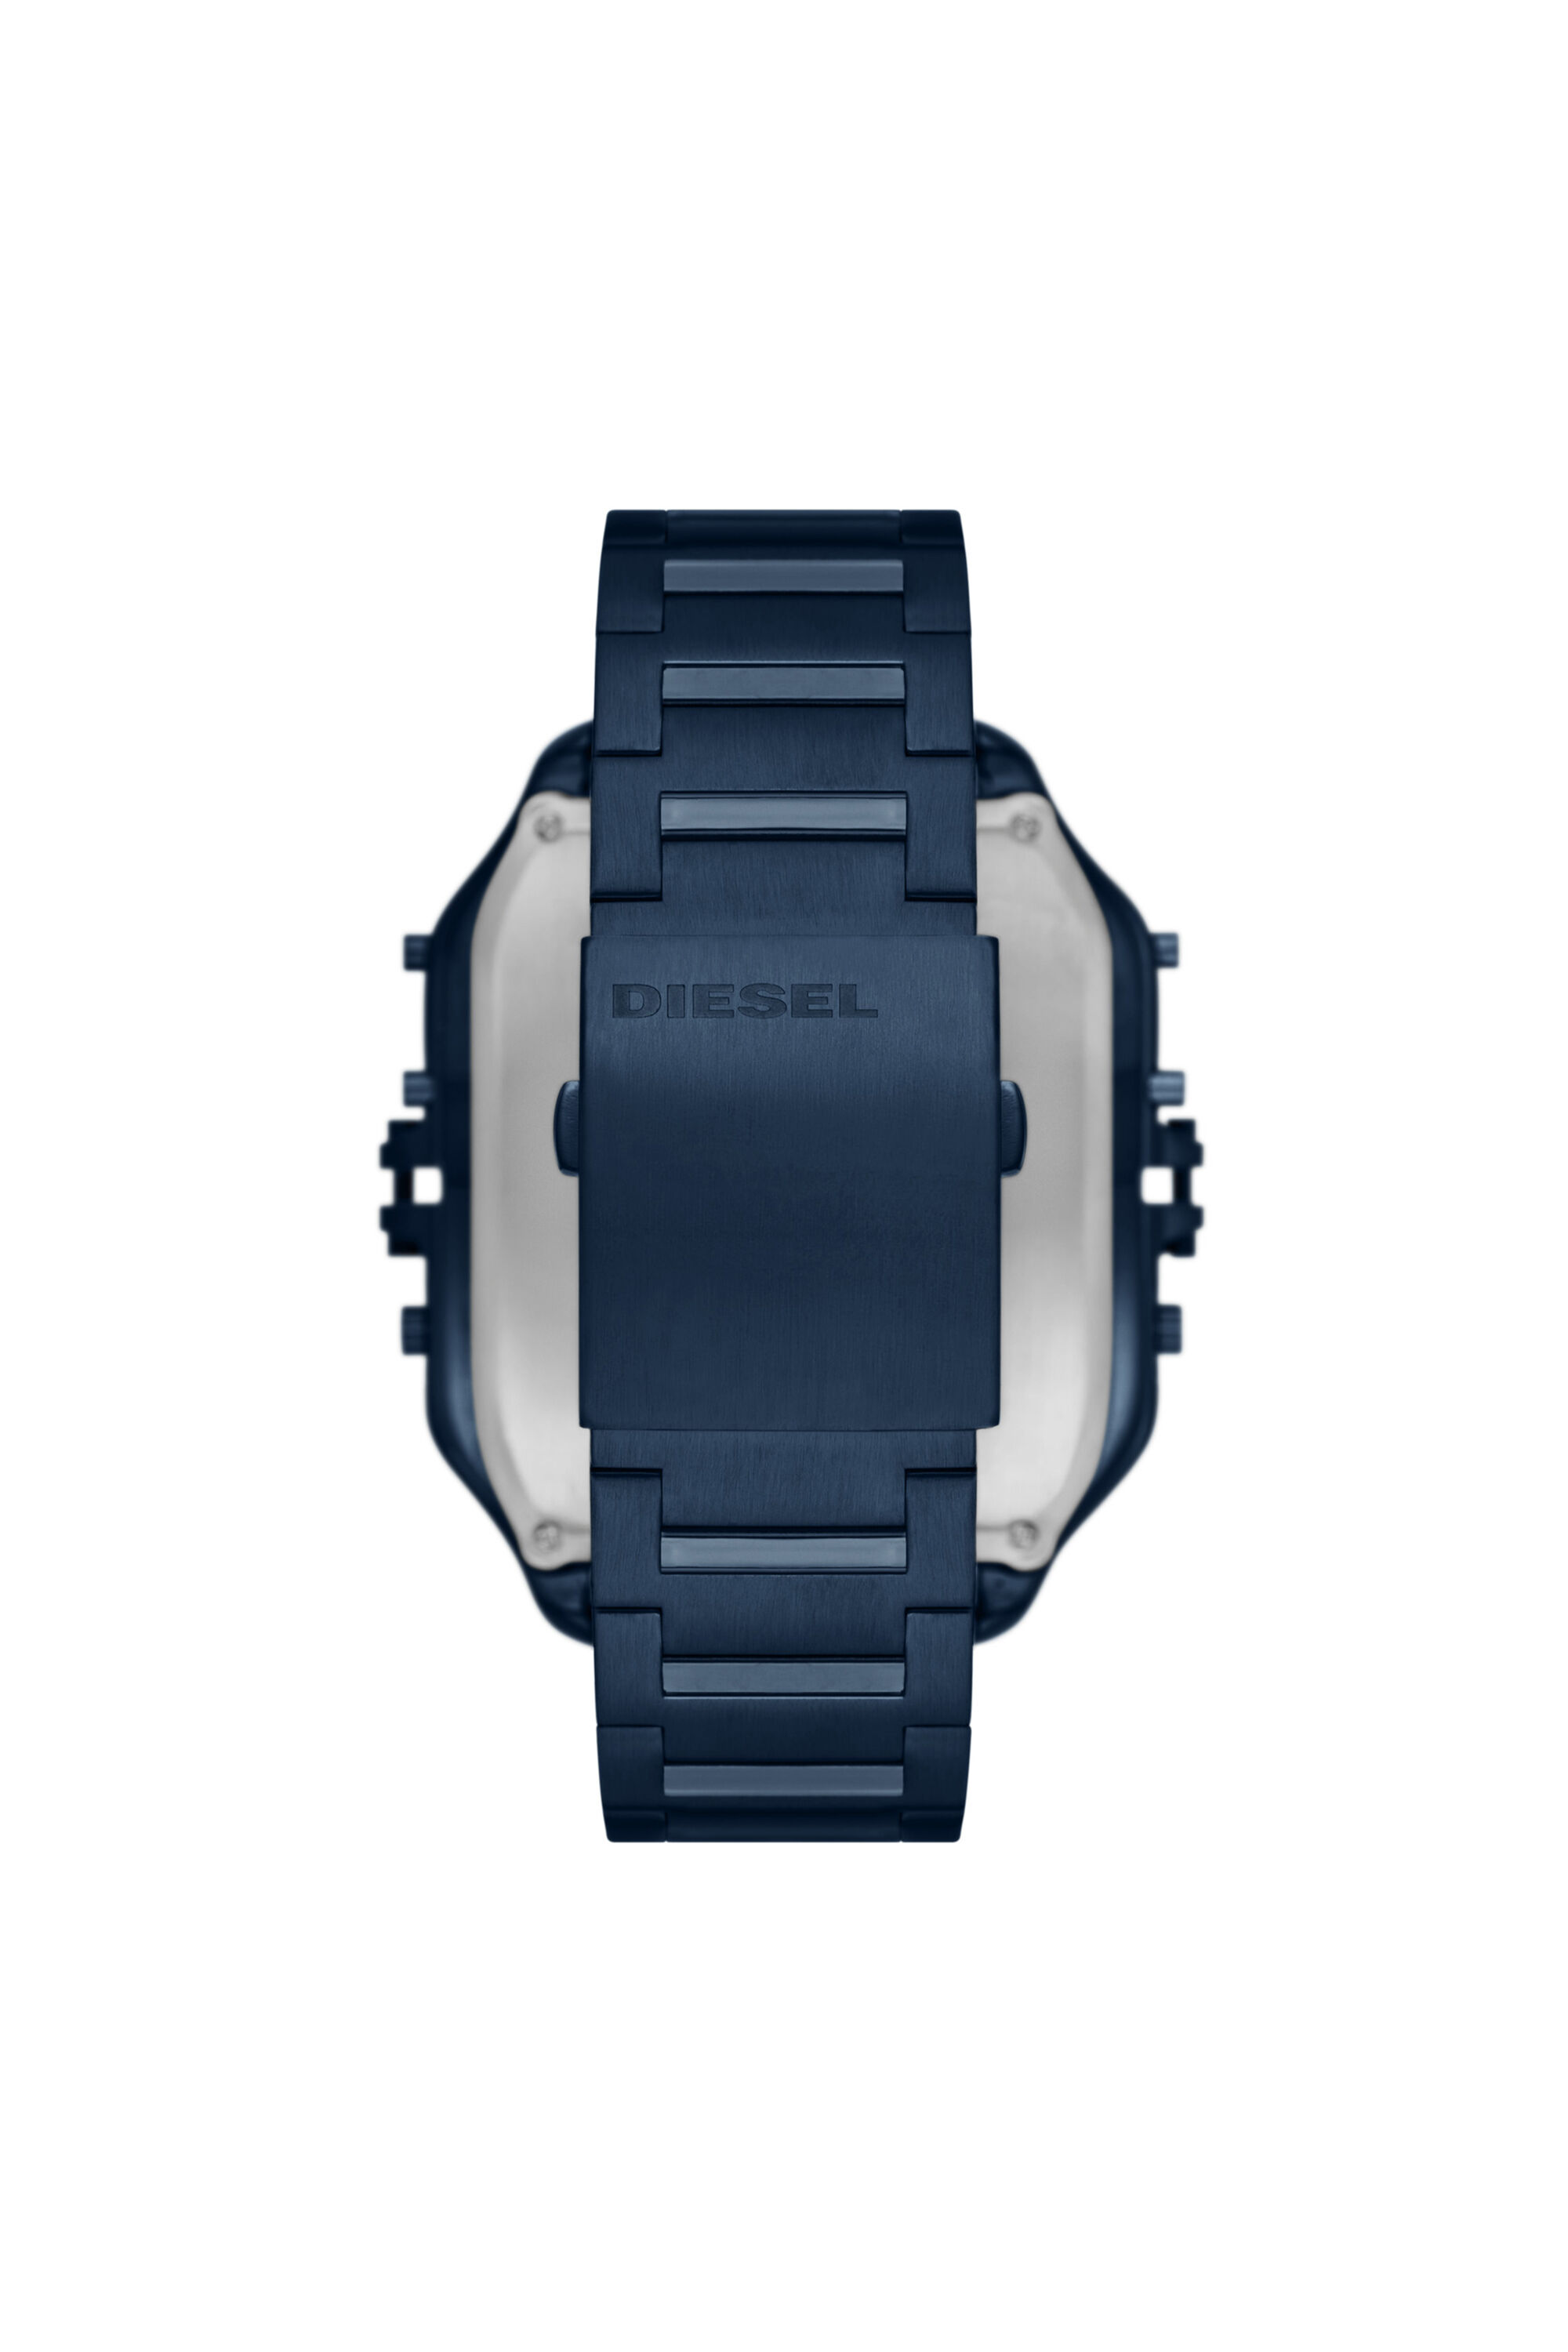 Diesel - DZ7464, Man Clasher digital blue-tone stainless steel watch in Blue - Image 2